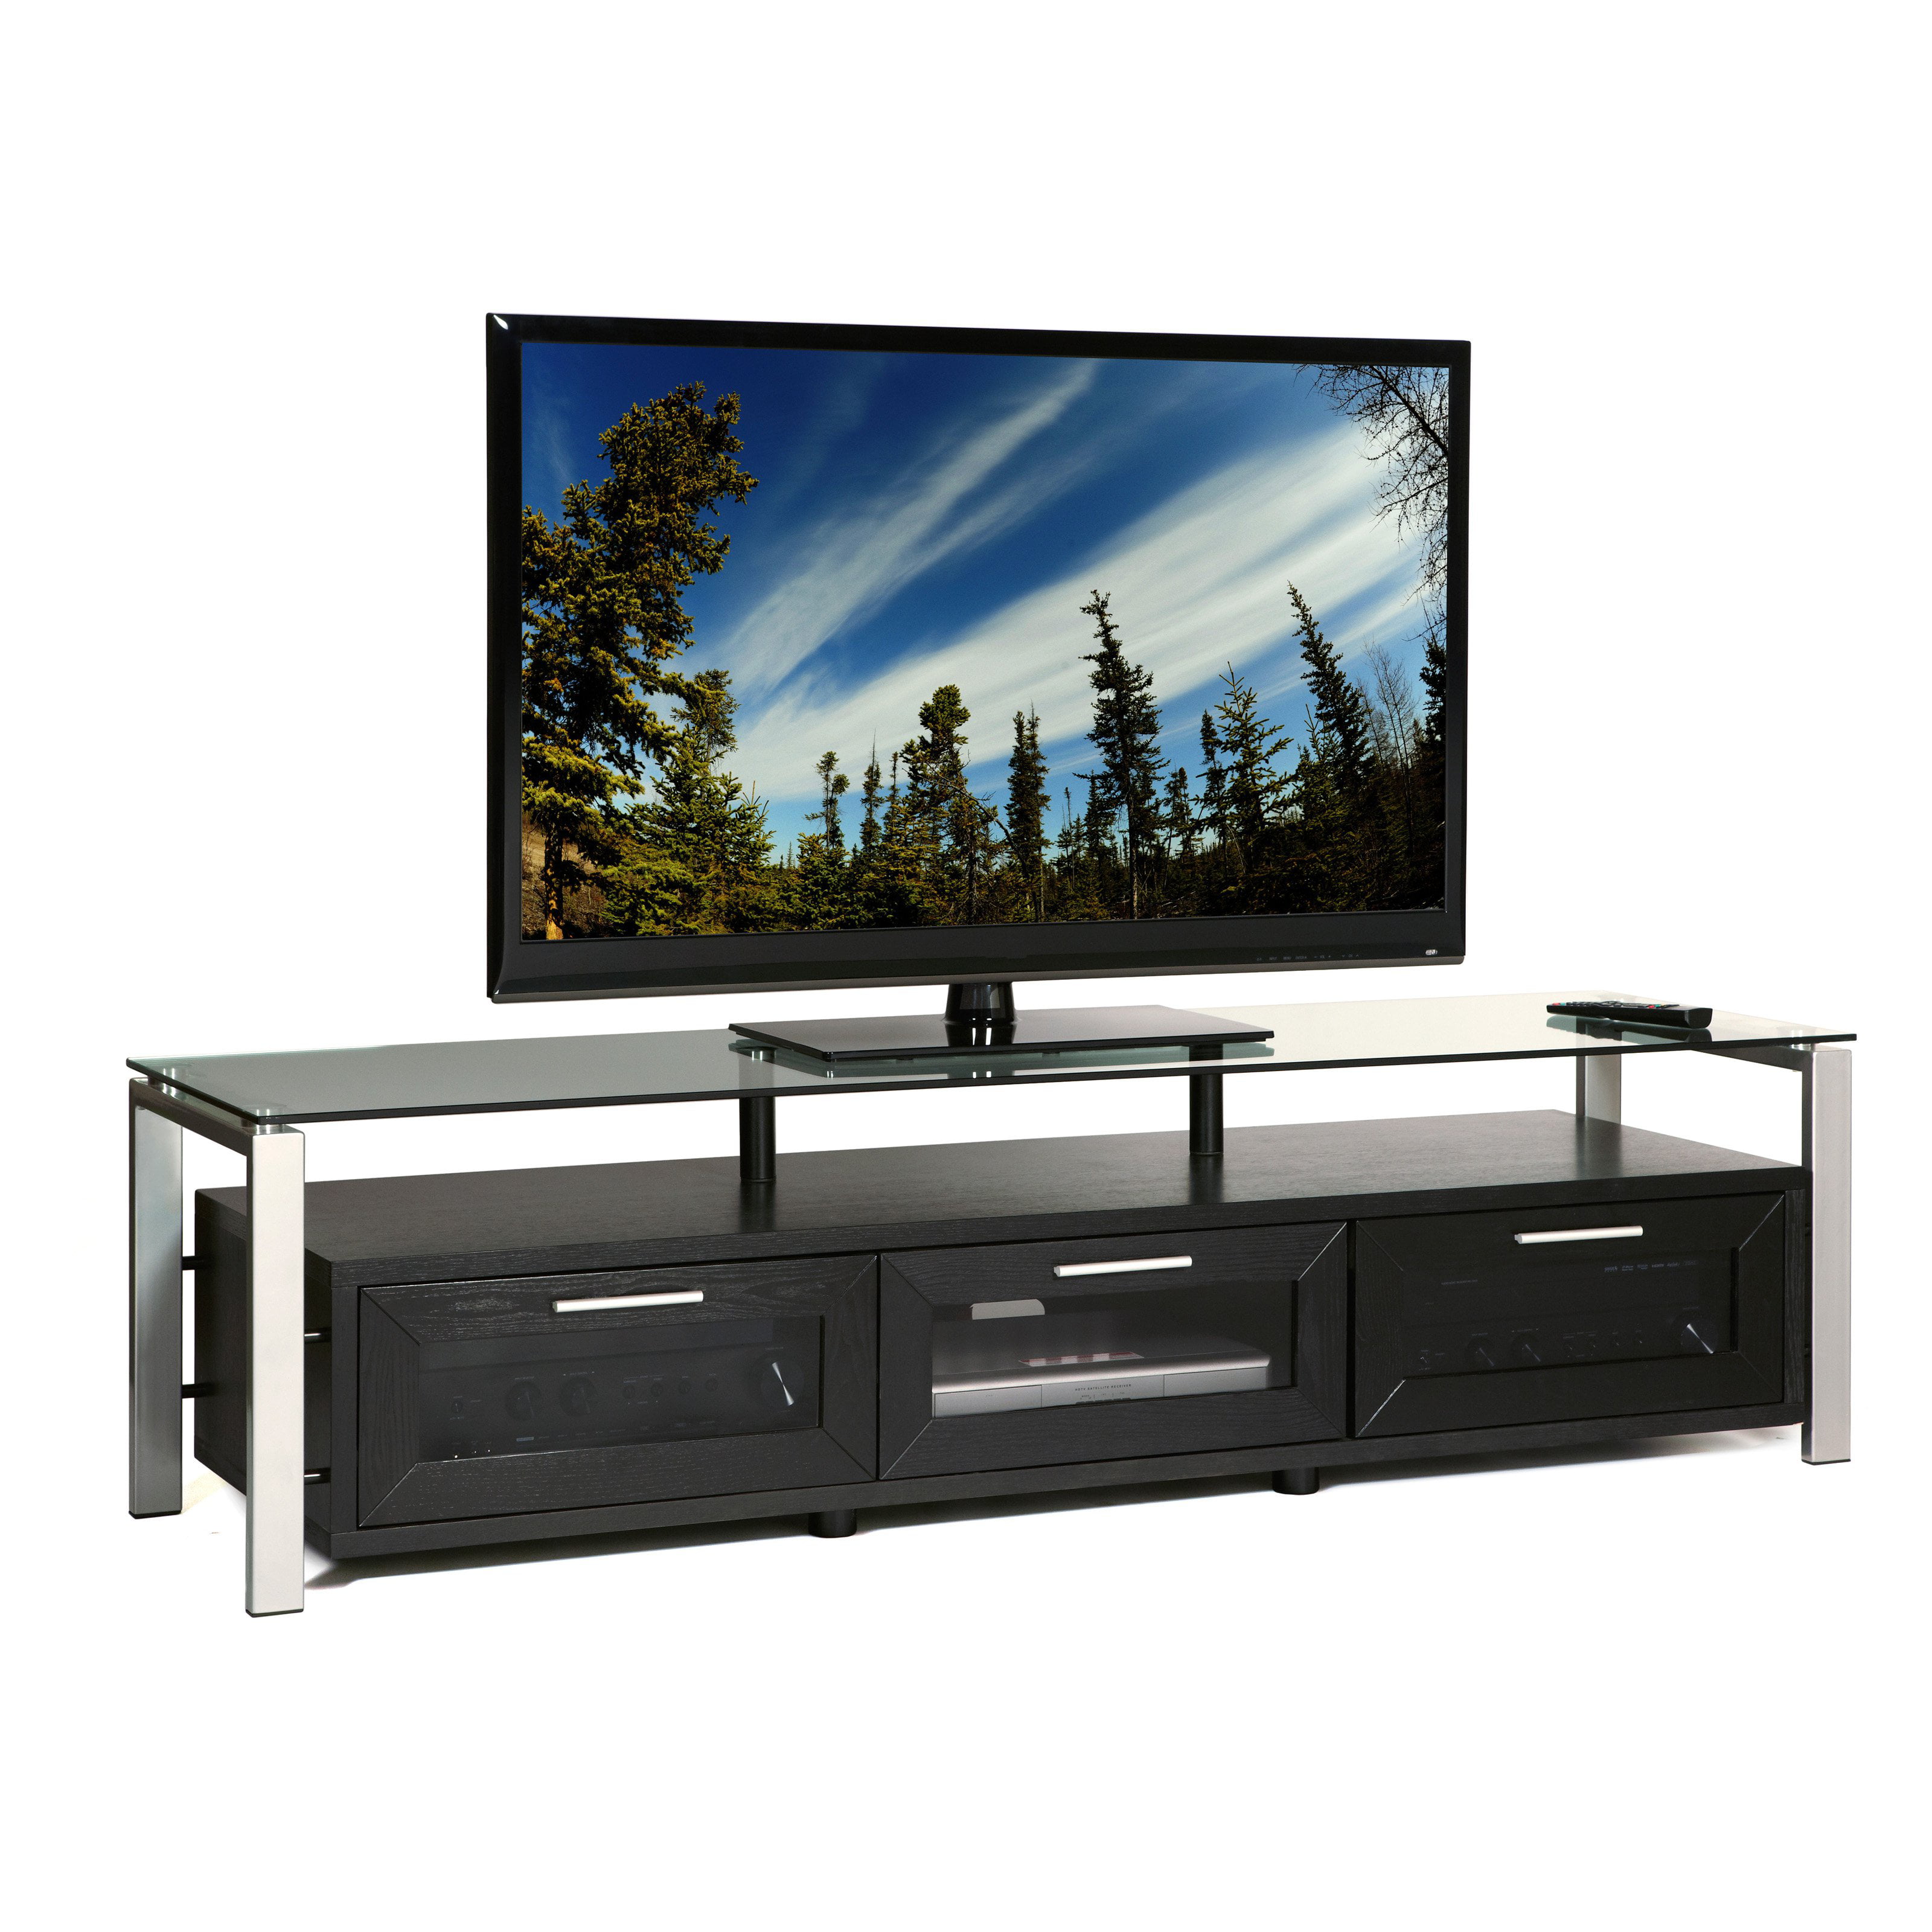 Image result for smart furniture tv stand